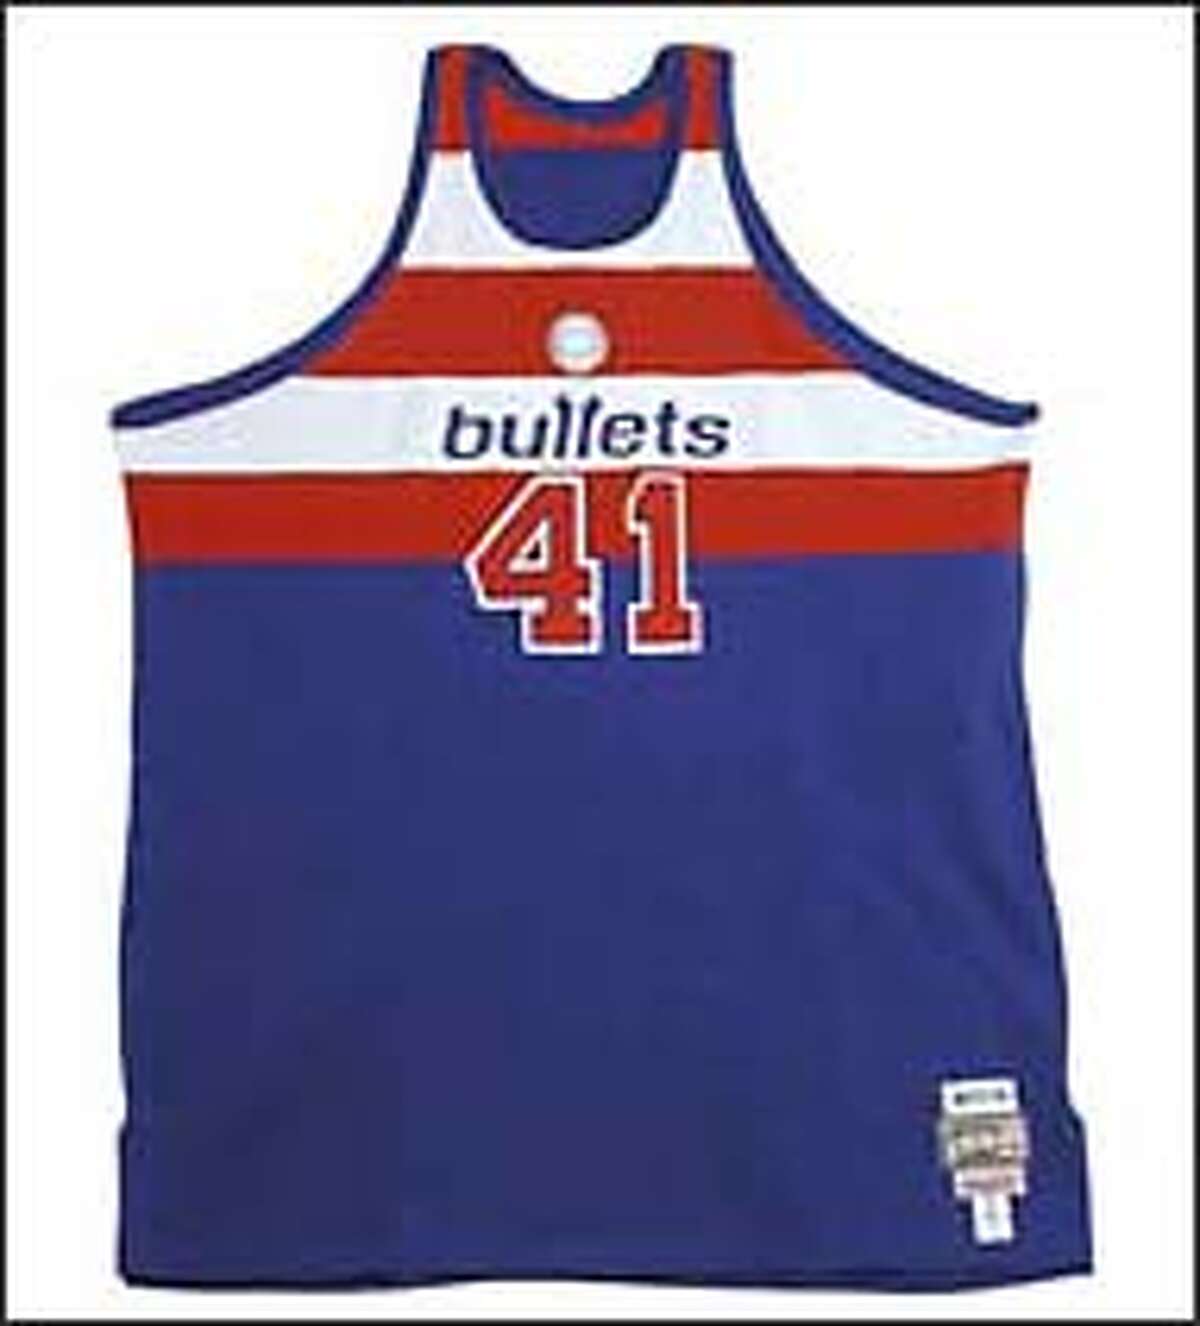 bullets basketball jersey